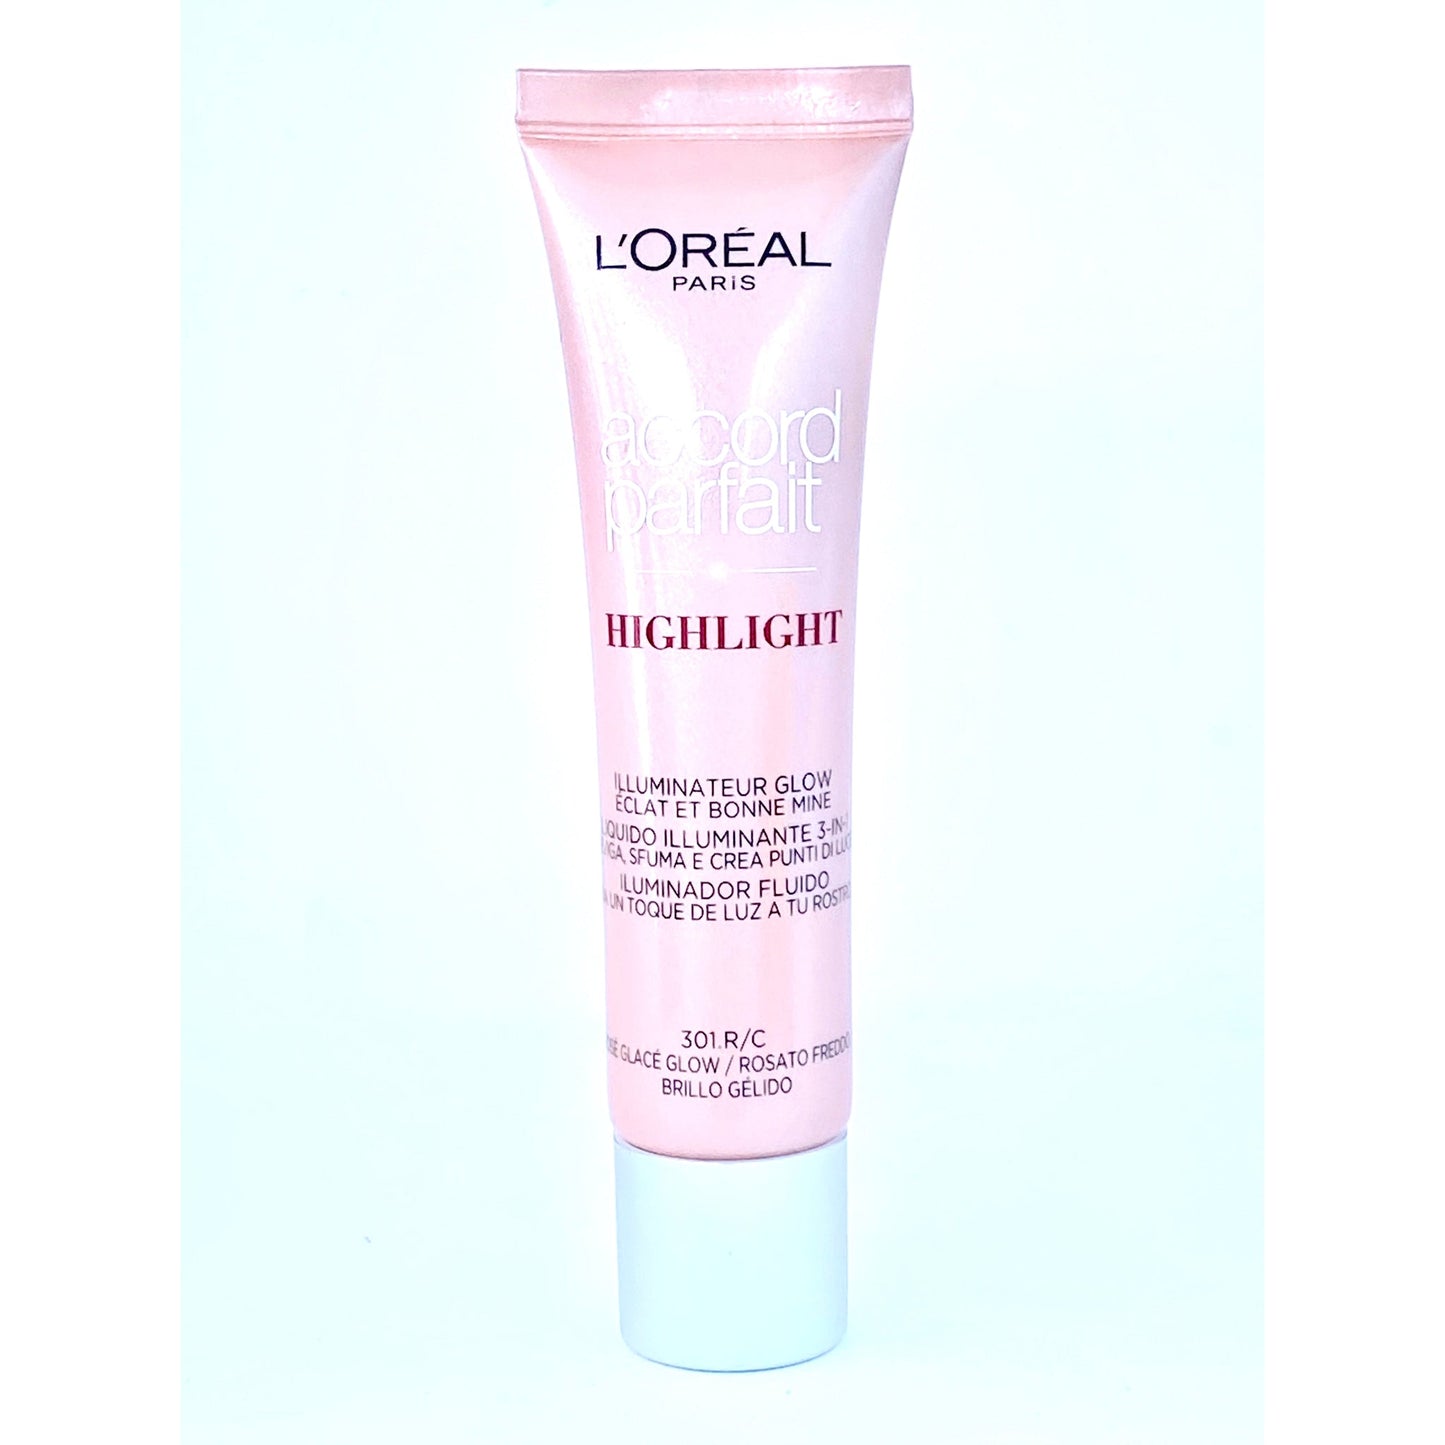 LOREAL Accord Parfait Highlight Makeup Finisher - Rose Glace Glow 301 R/C-L'Oreal-BeautyNmakeup.co.uk